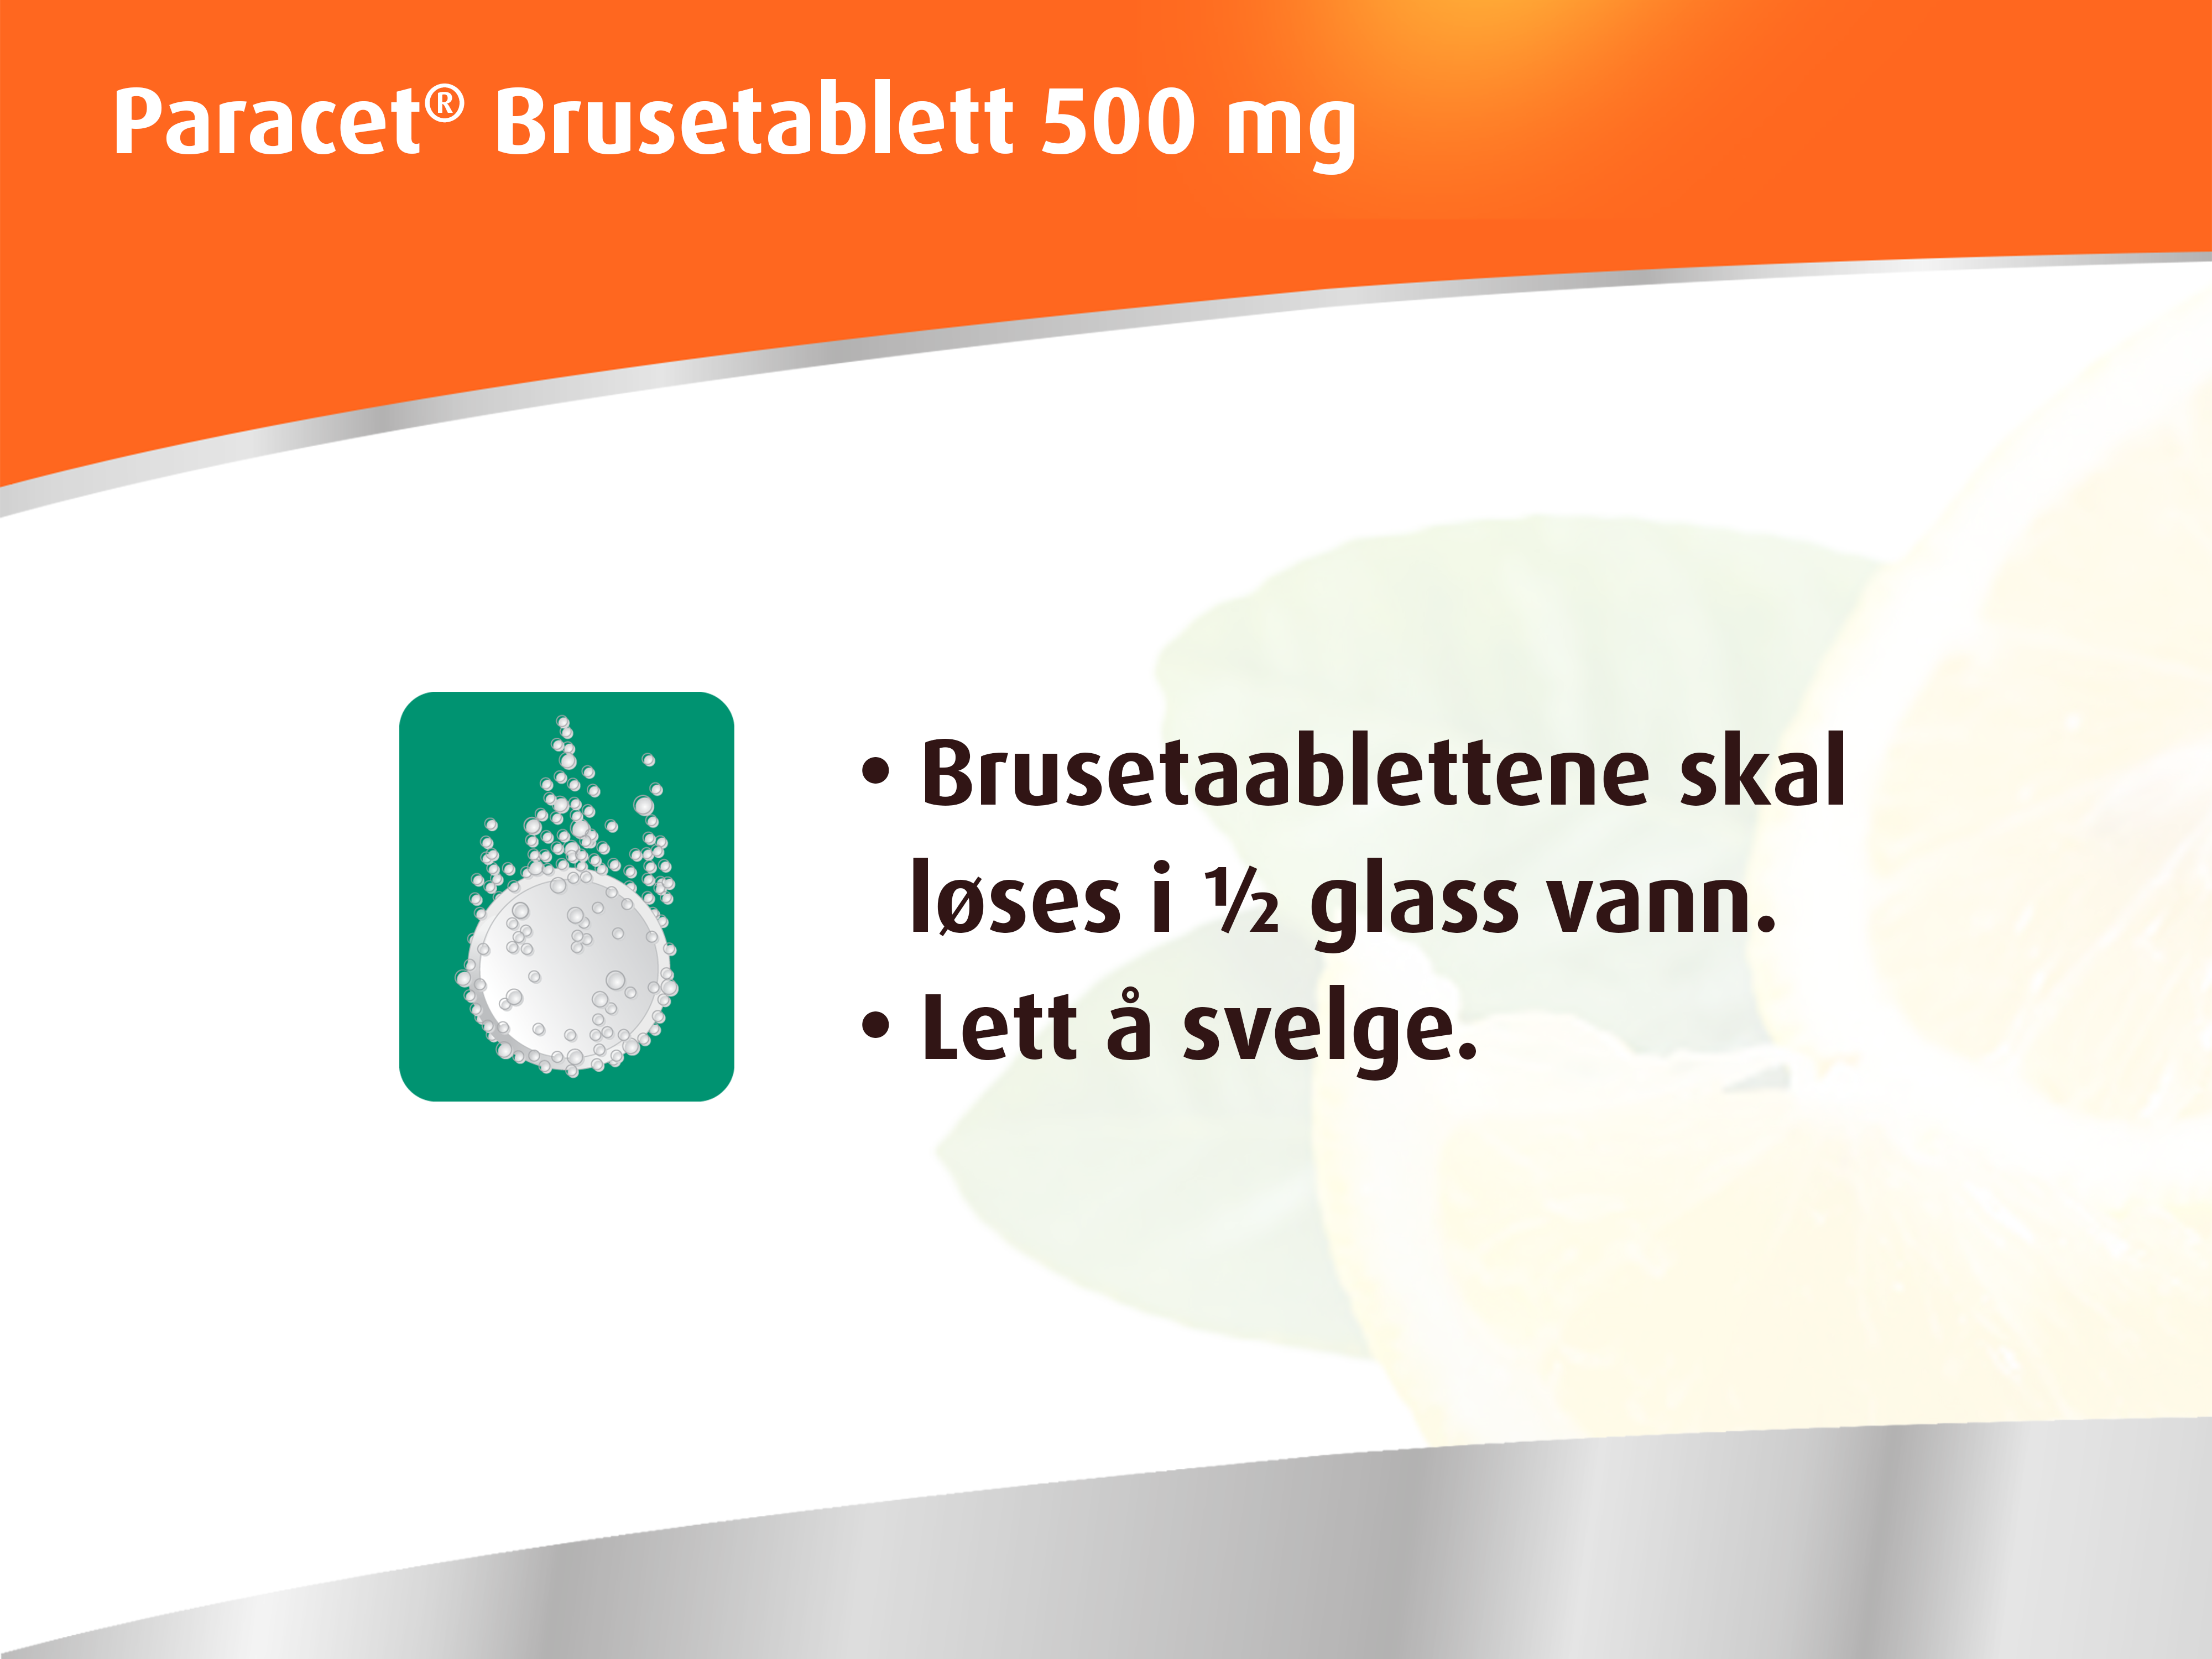 Paracet 500 mg brusetabletter, 20 stk.